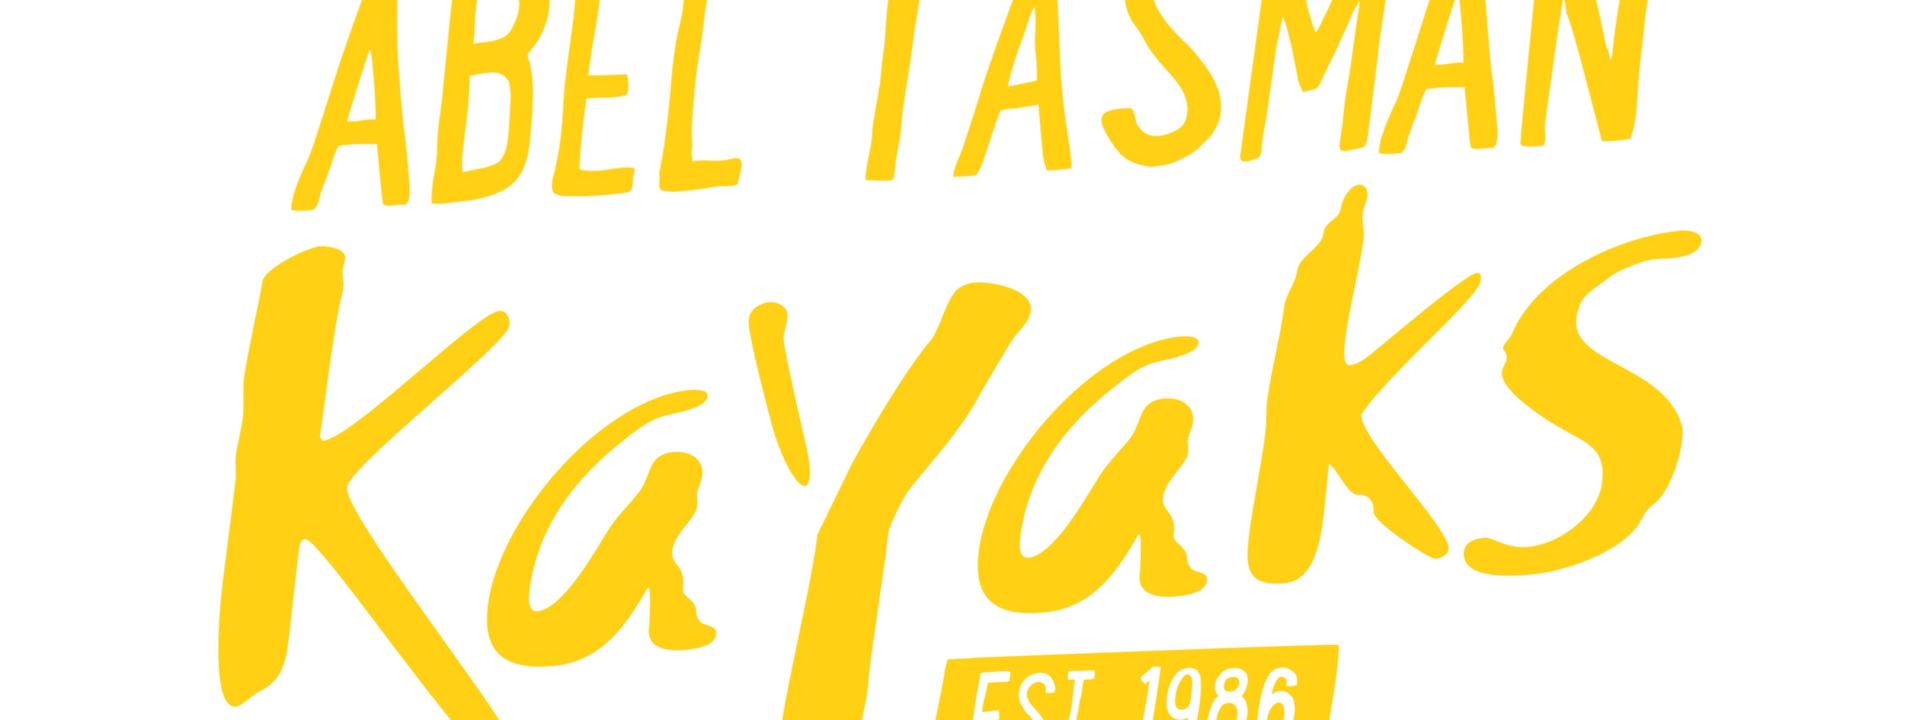 Able Tasman Logo Freedom.jpg